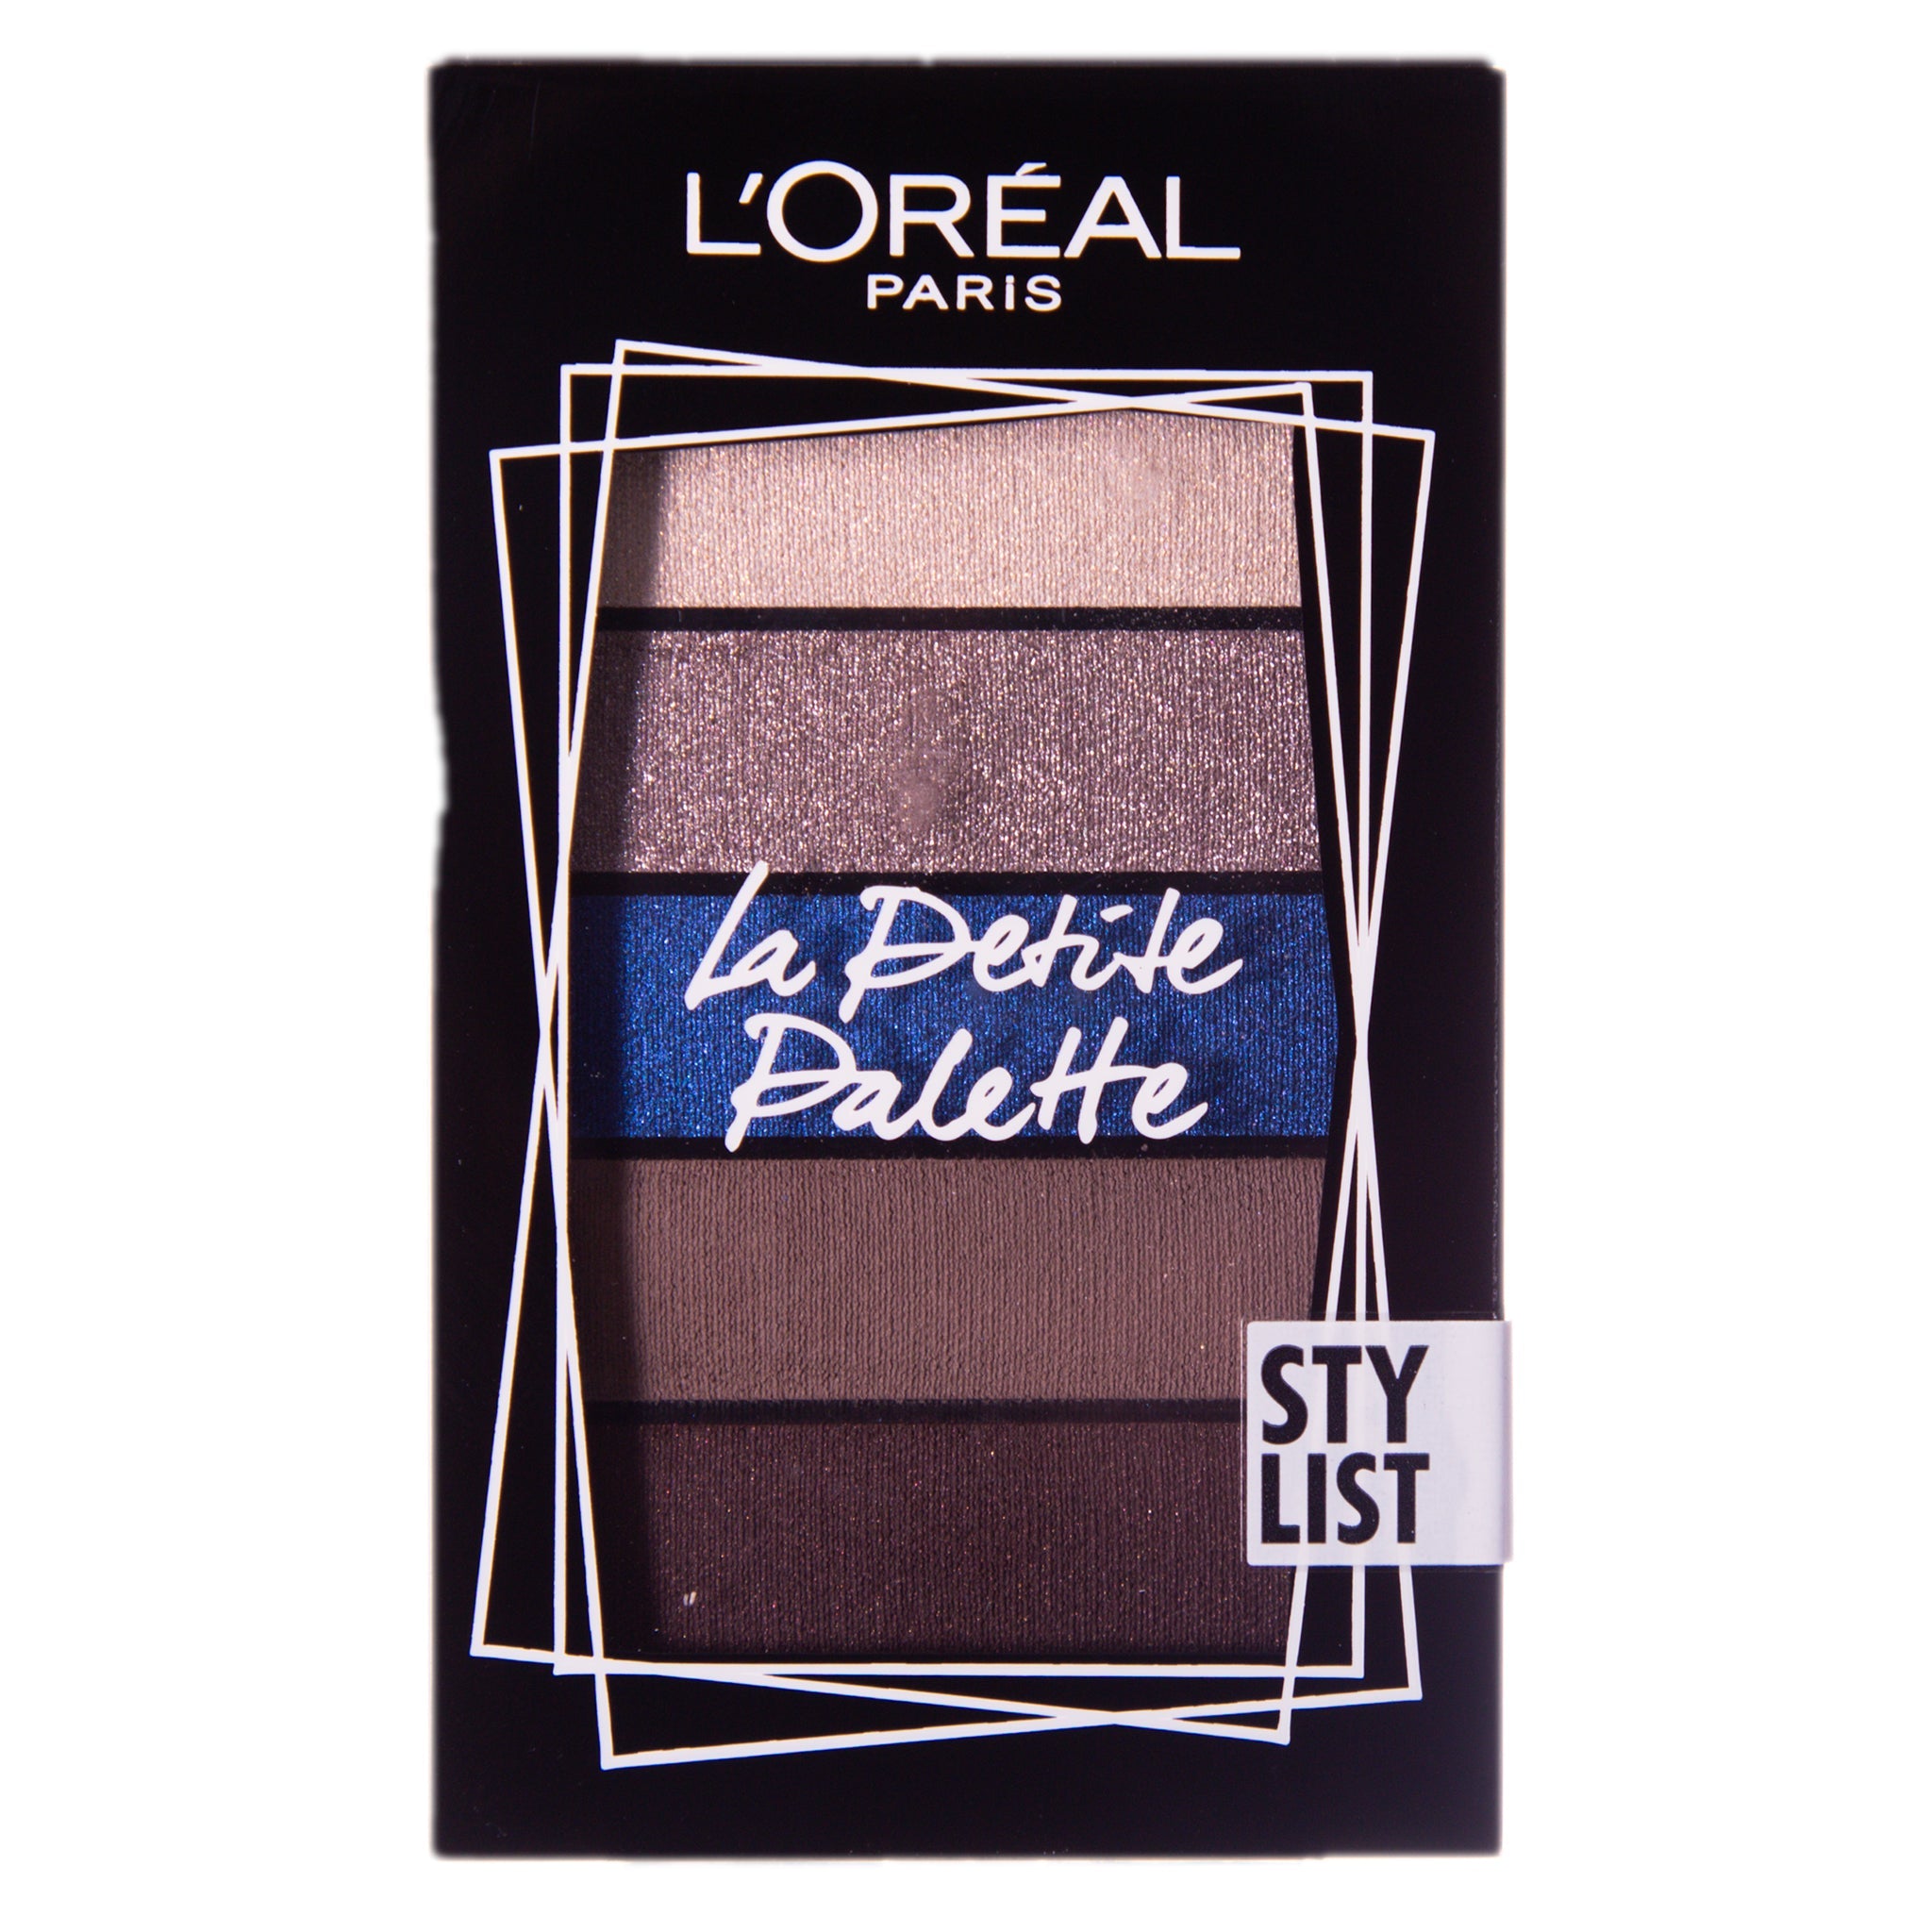 L'Oreal Paris Mini Eyeshadow Palette - Stylist